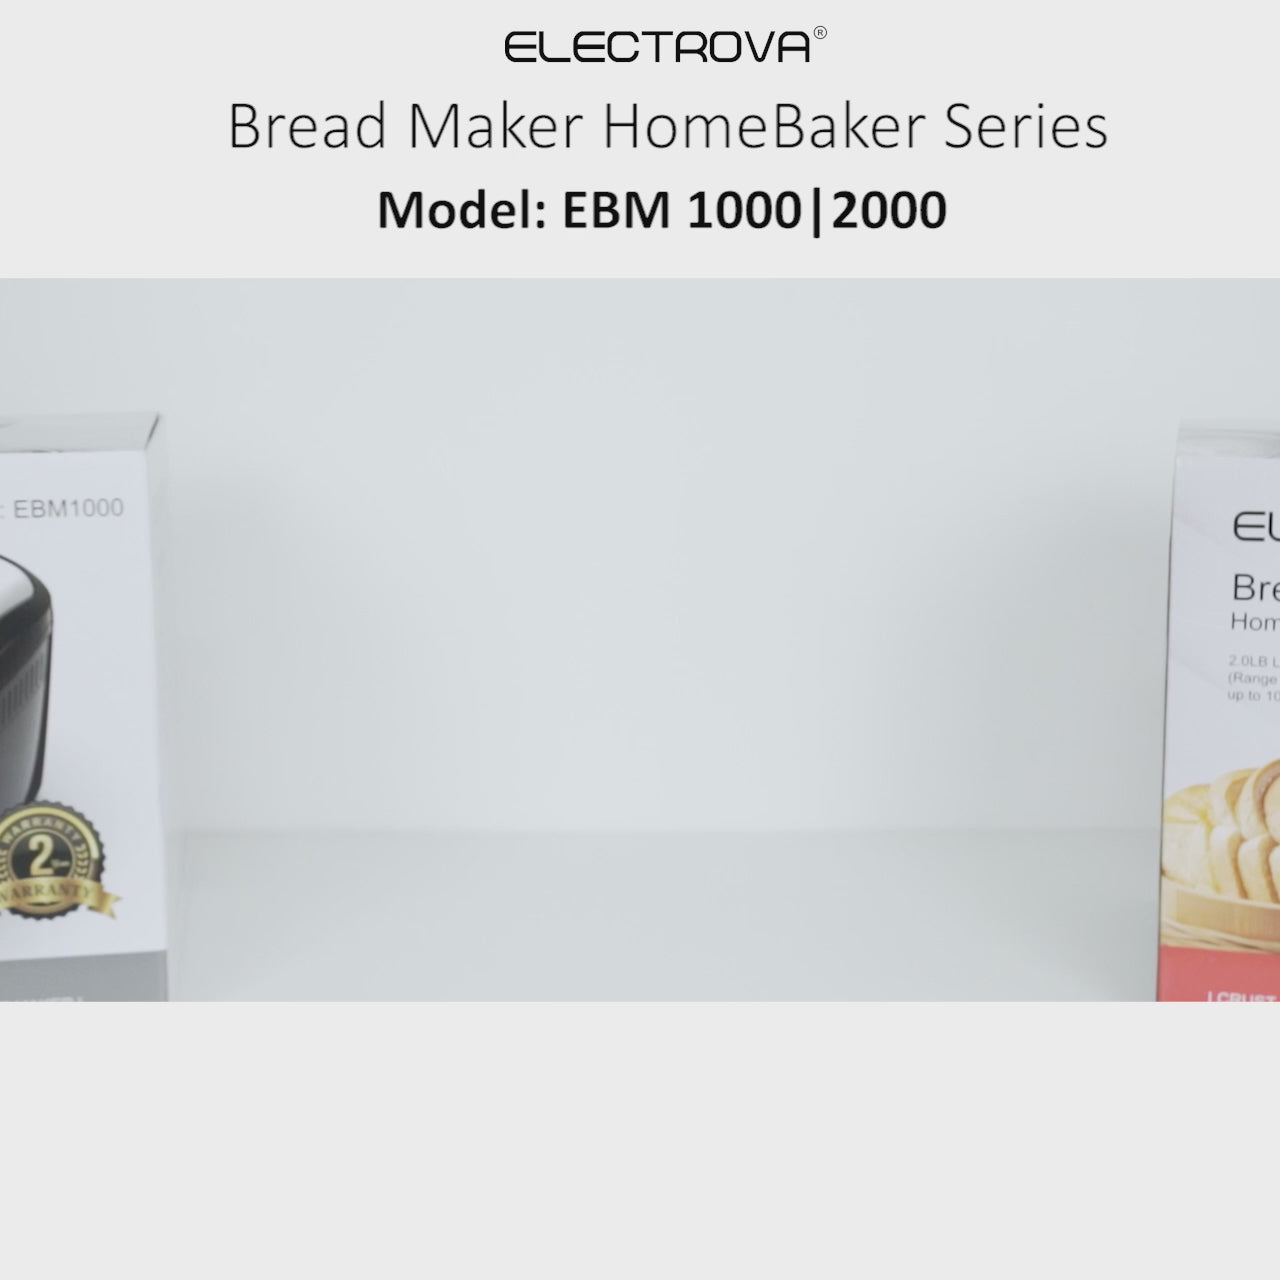 Electrova HomeBaker Series Bread Maker (3.5LB)